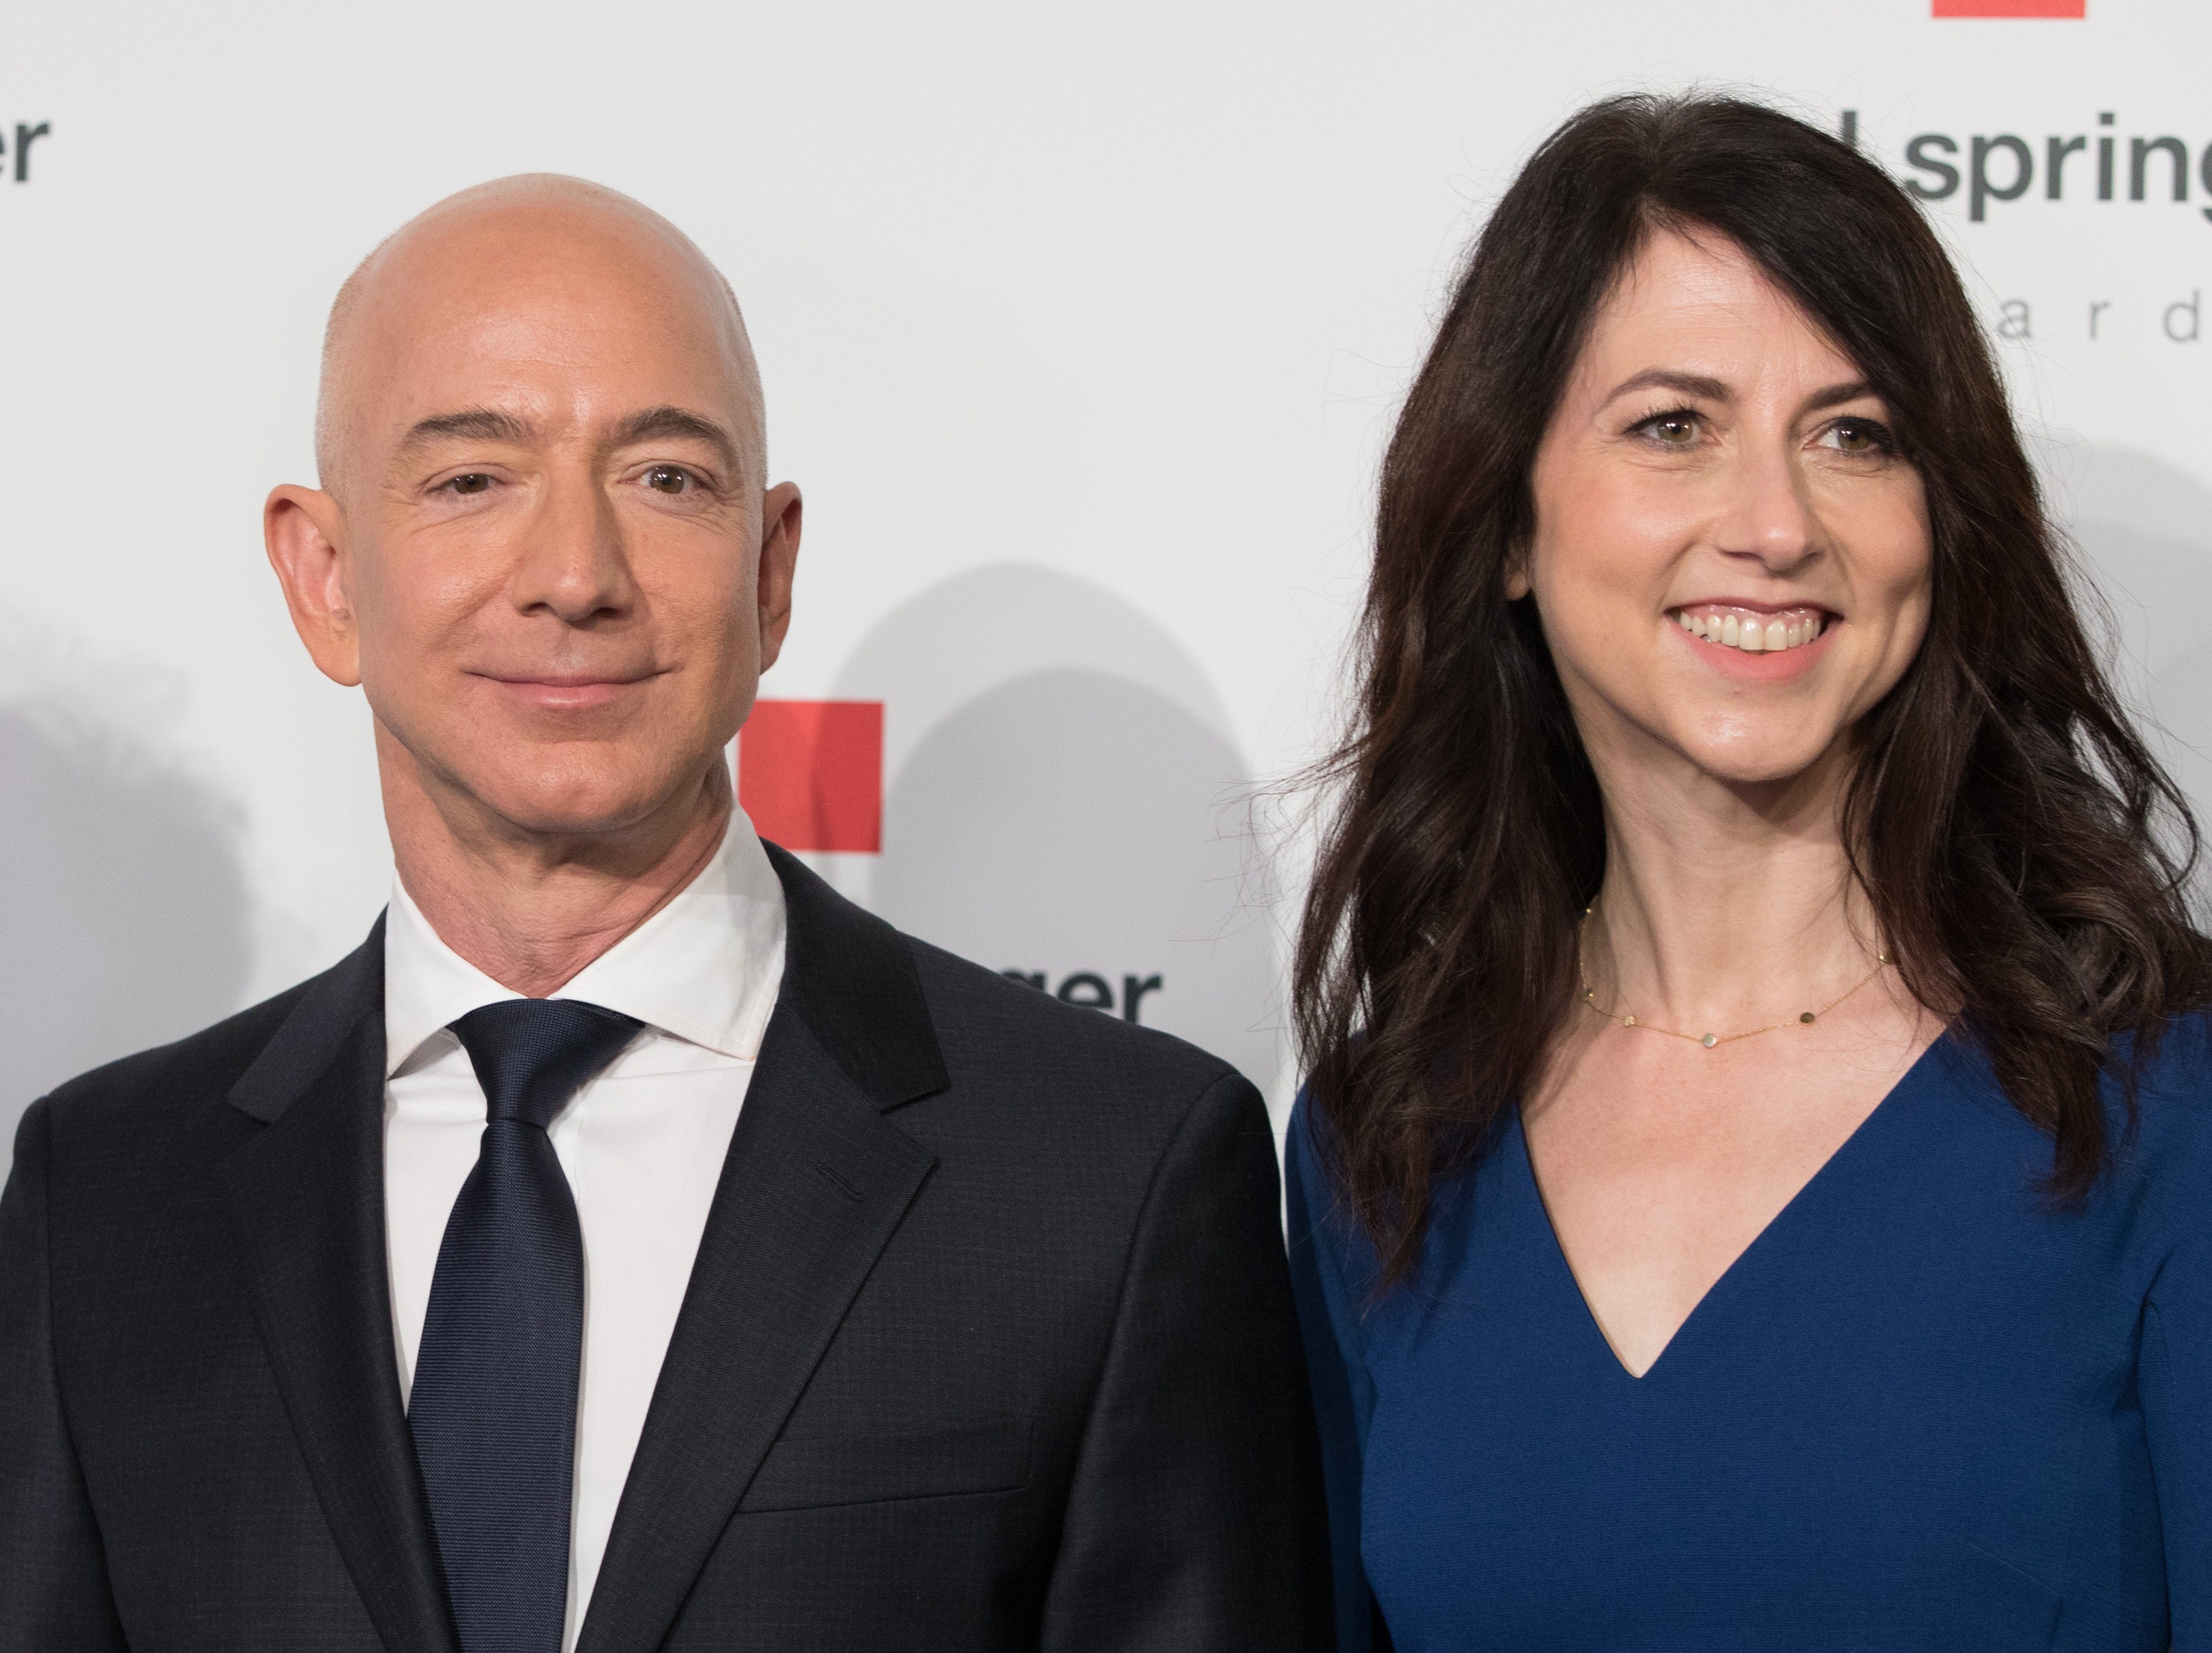 Mackenzie Scott, former wife of Amazon founder Jeff Bezos, recently gave Philadelphia nonprofit Benefits Data Trust a no-strings $20 million gift pic